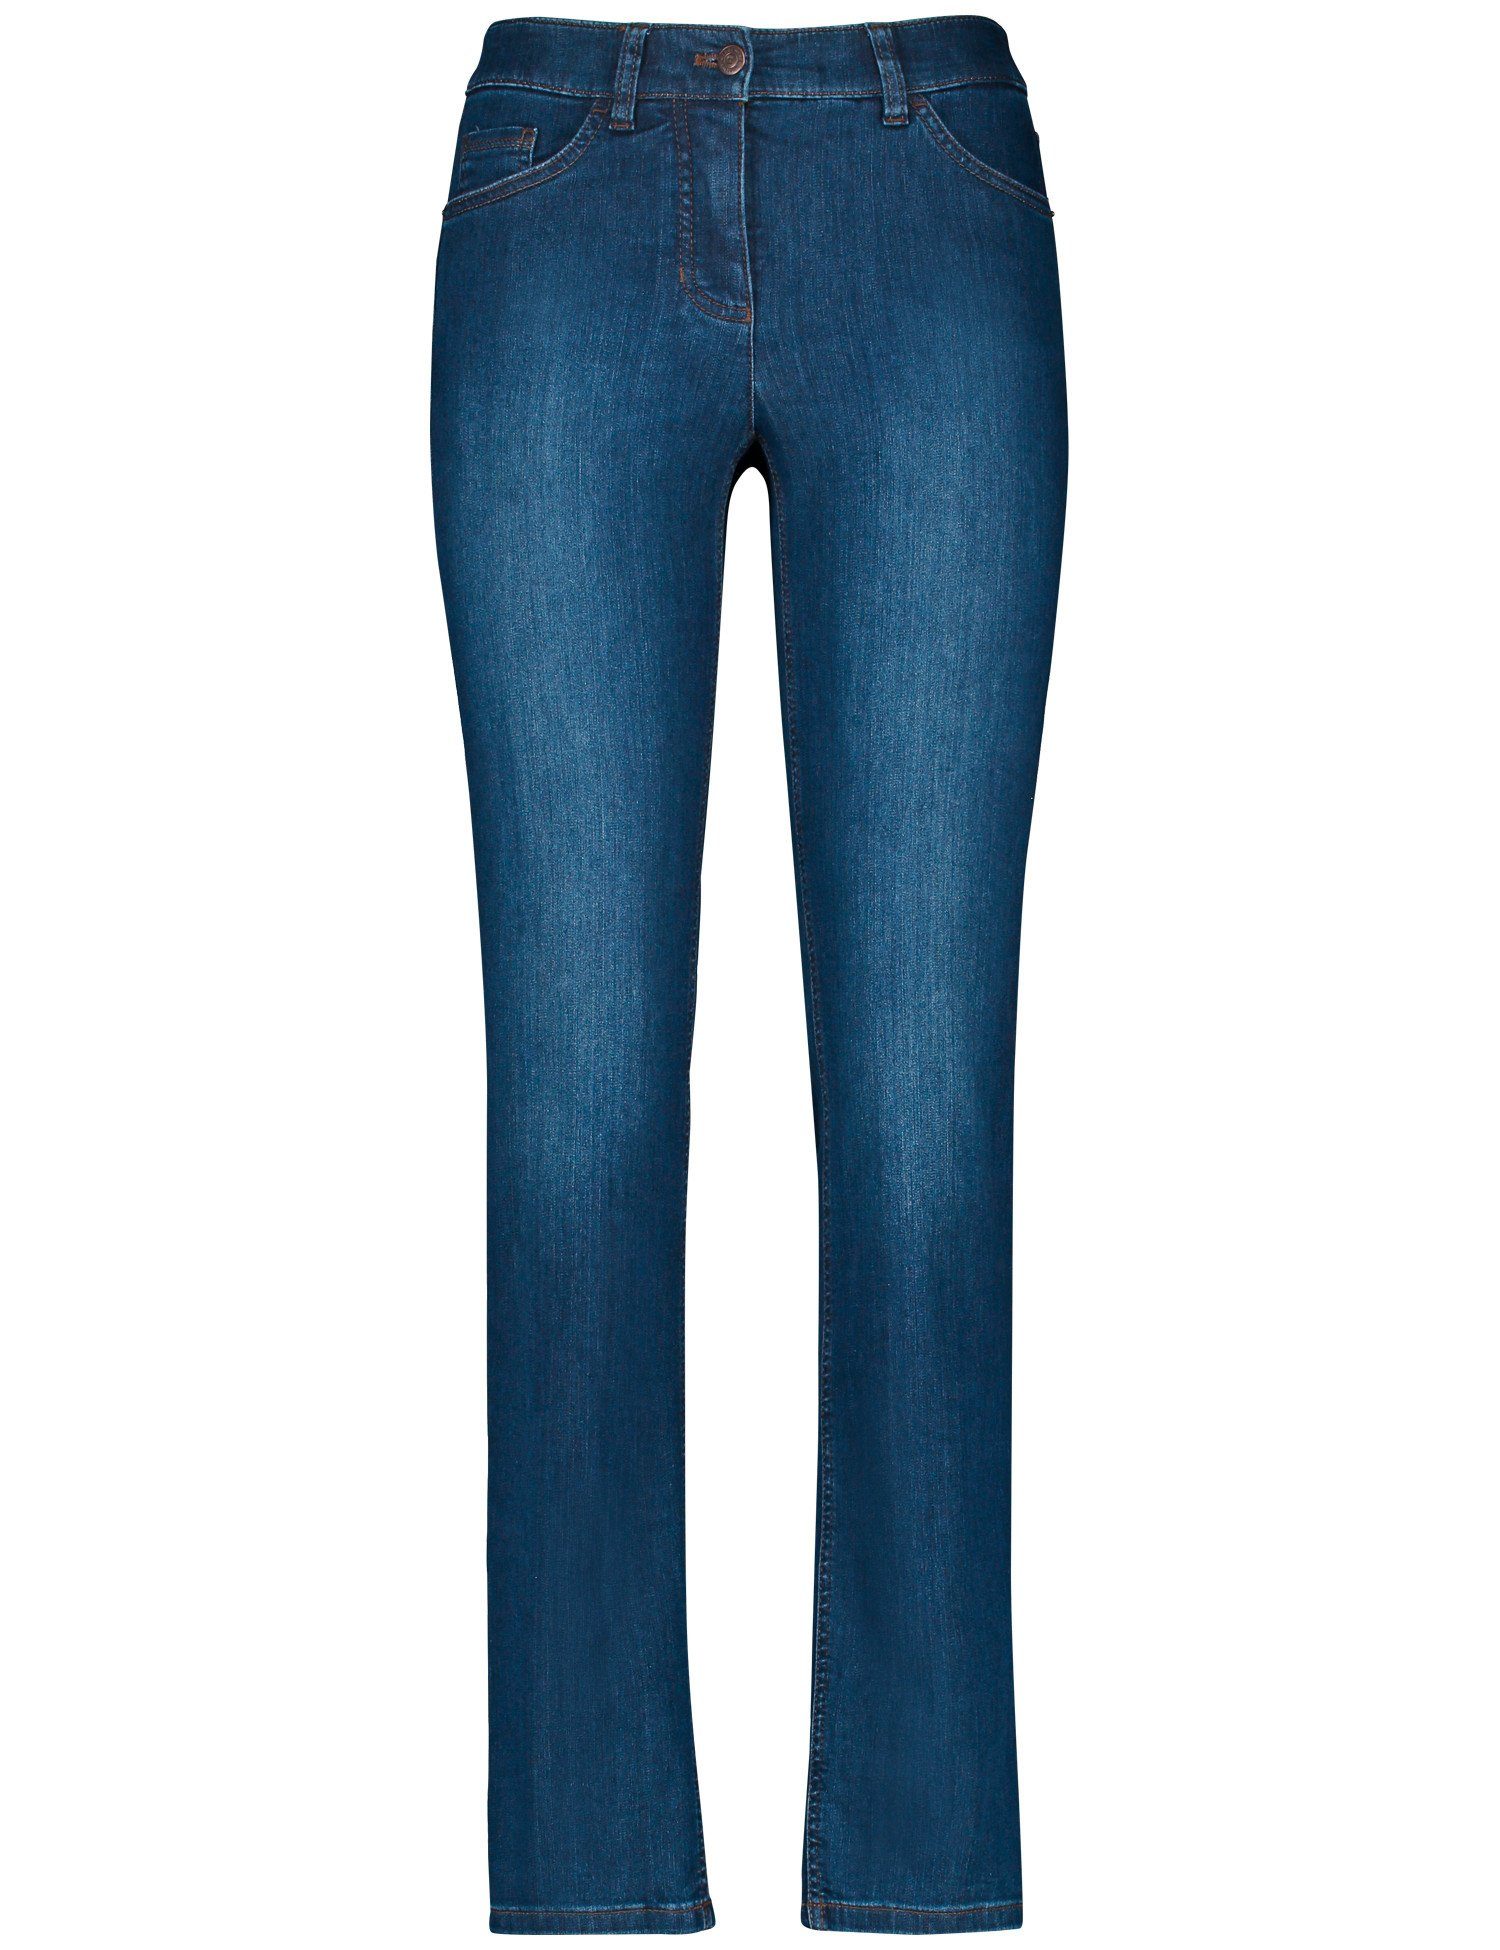 GERRY Best4me Stretch-Jeans 5-Pocket WEBER Jeans denim Slimfit dark mit blue use